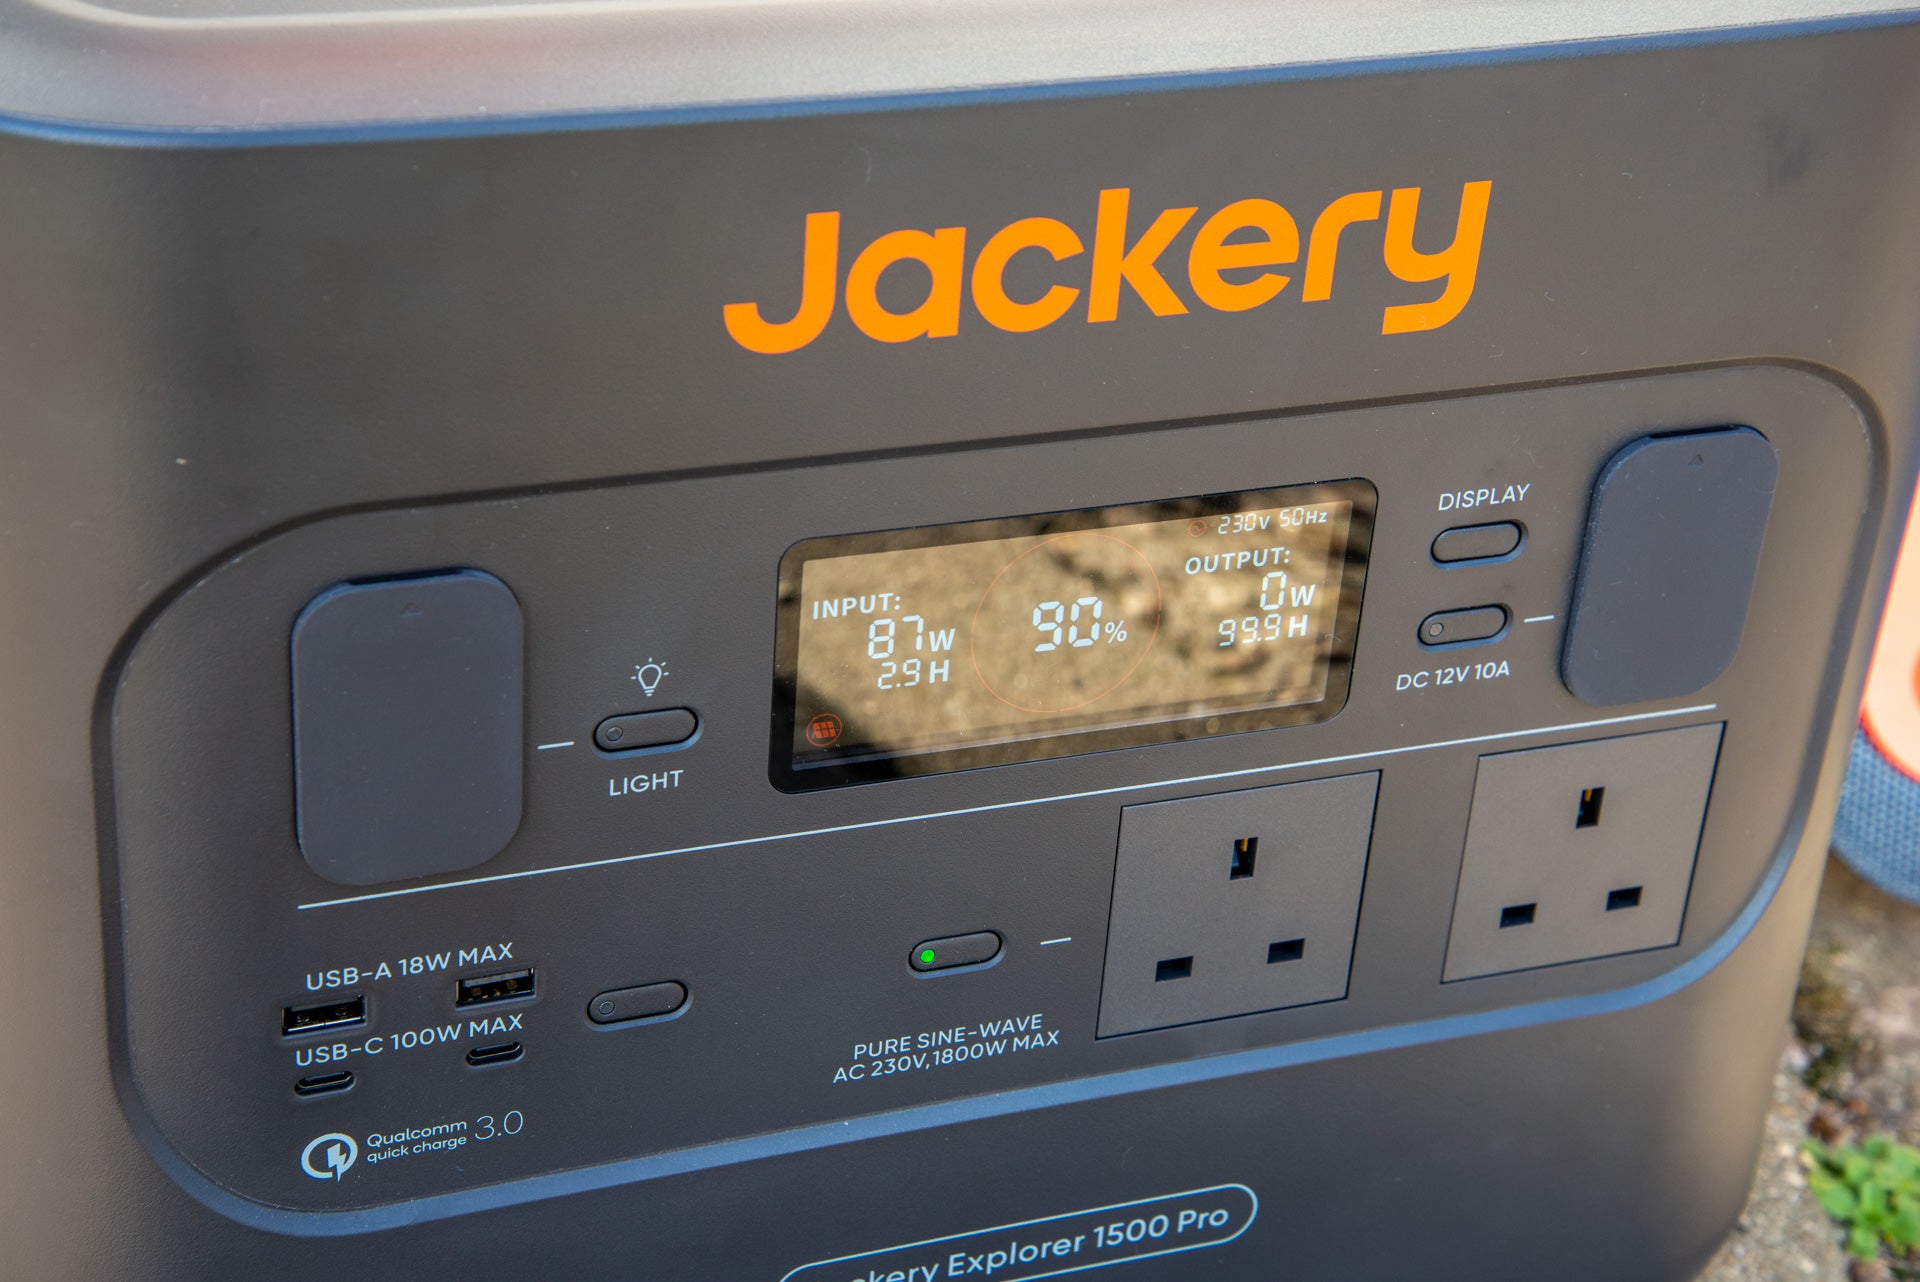 Jackery Explorer 1500 Pro display